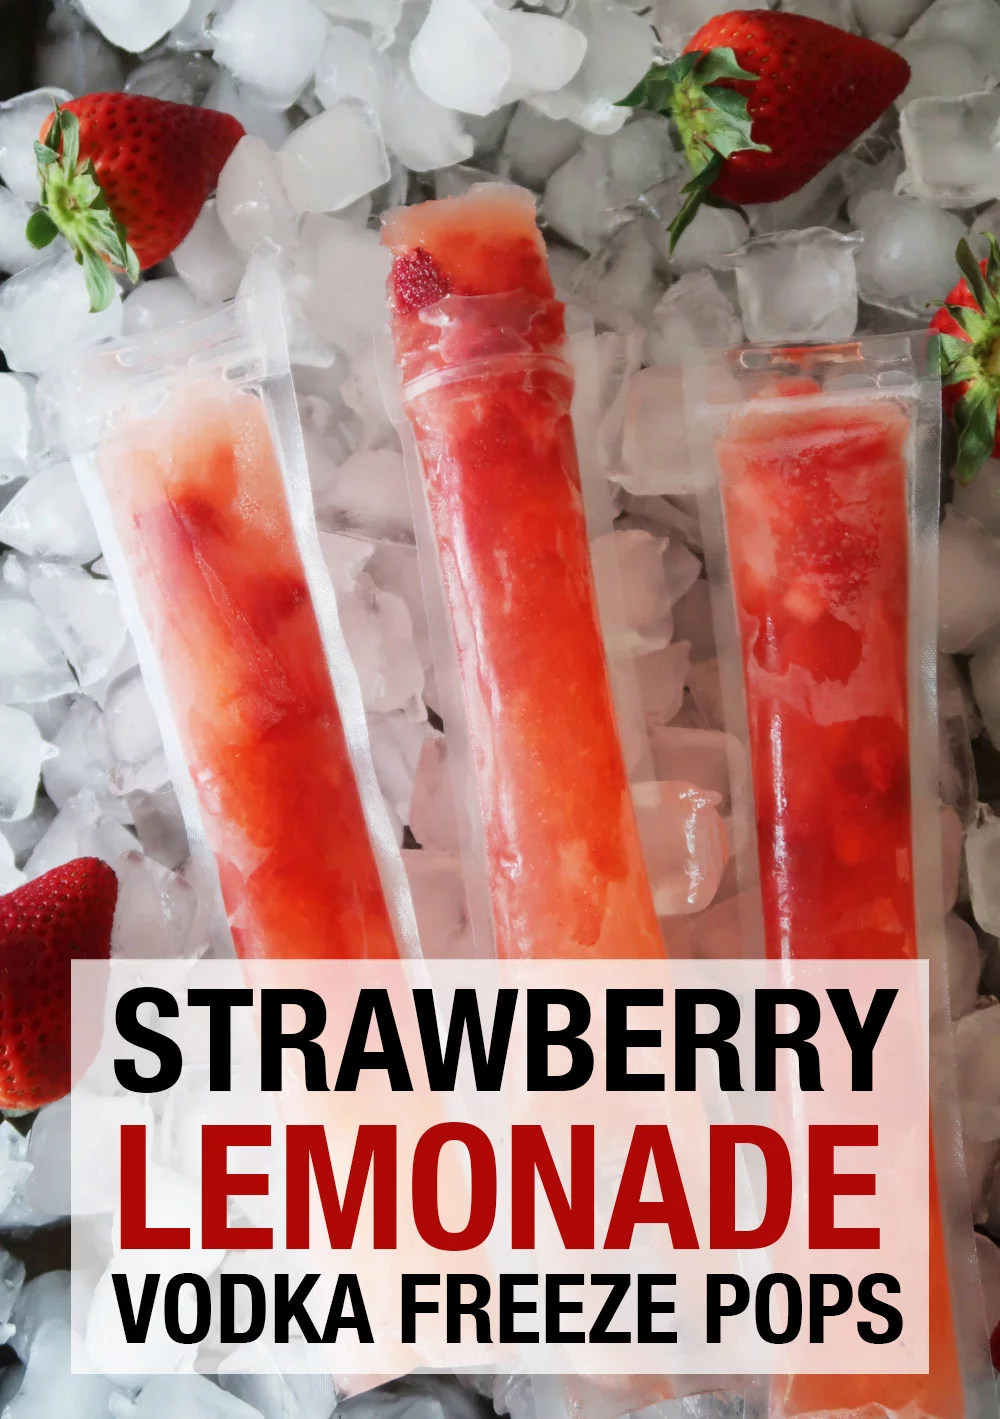 Strawberry Lemonade vodka freeze pop